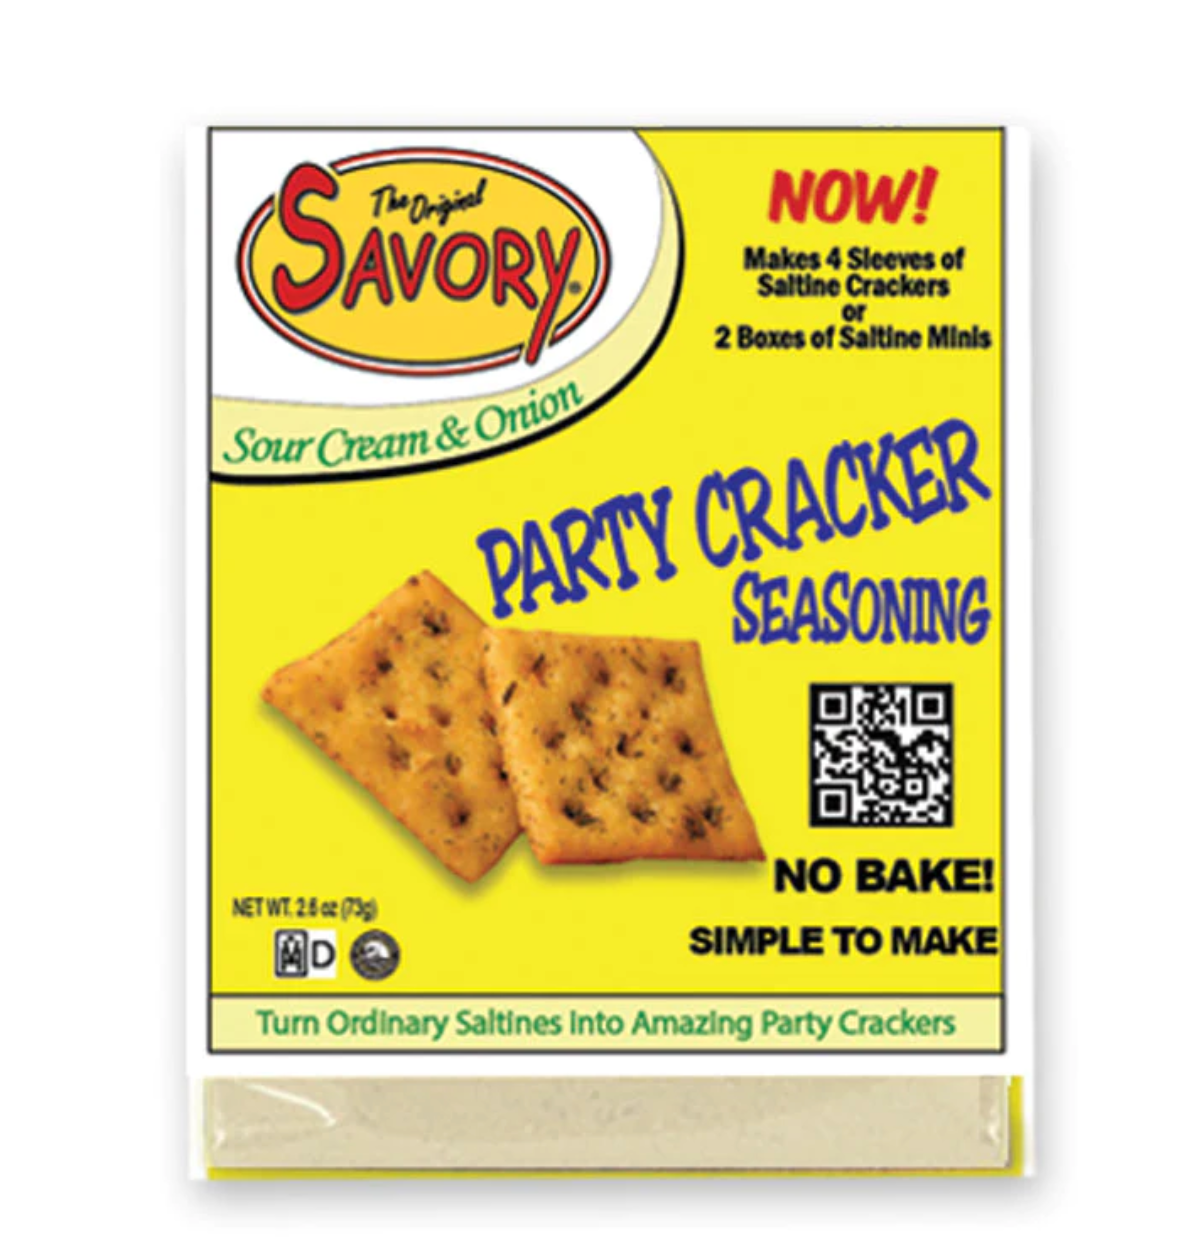 Party Cracker Seasoning